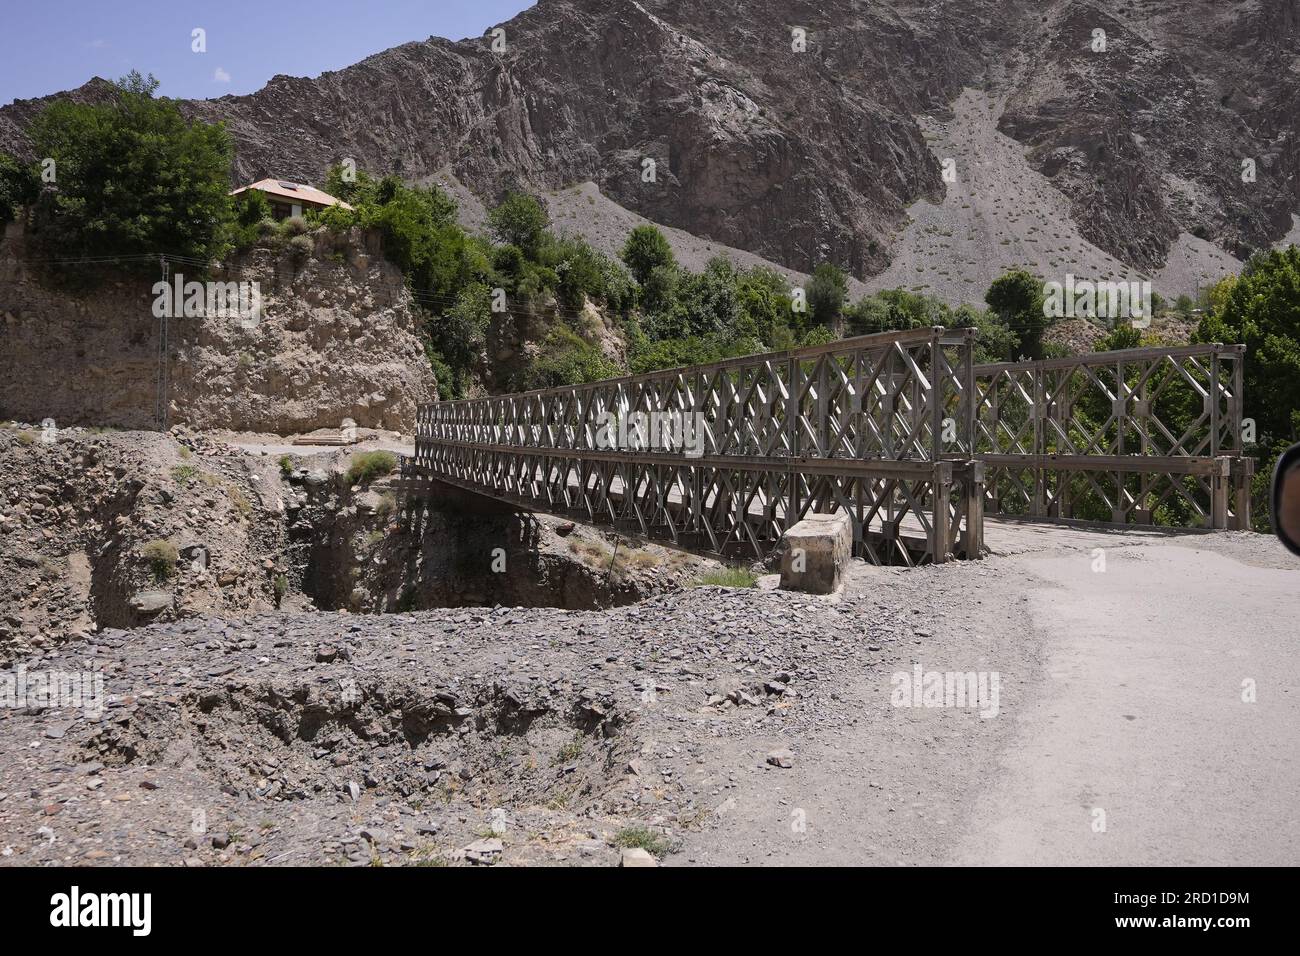 A bridge amongst the barren mountains Stock Photo